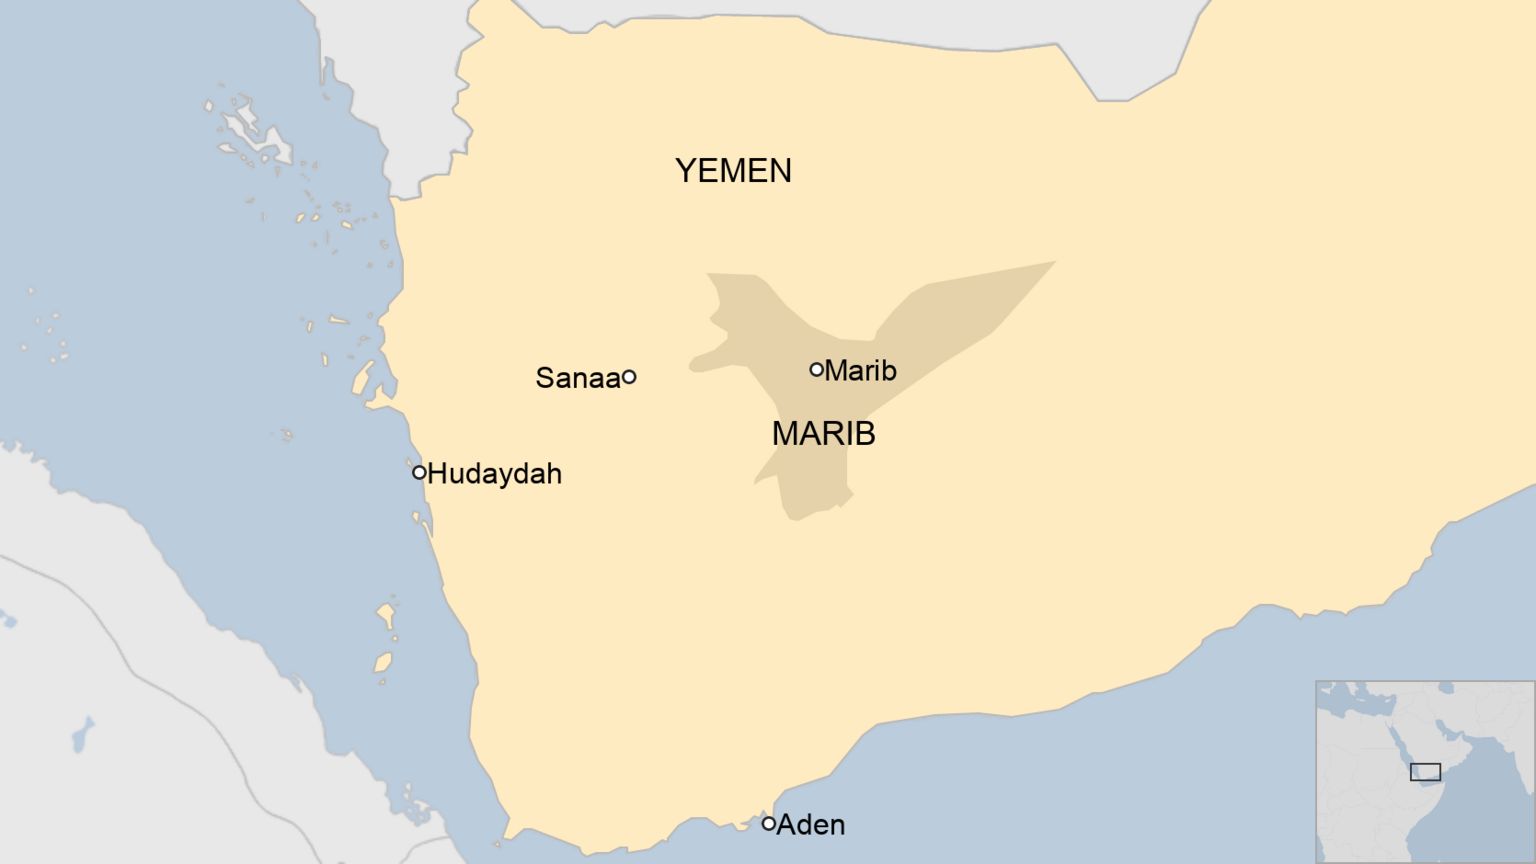 Map of Yemen showing location of Marib